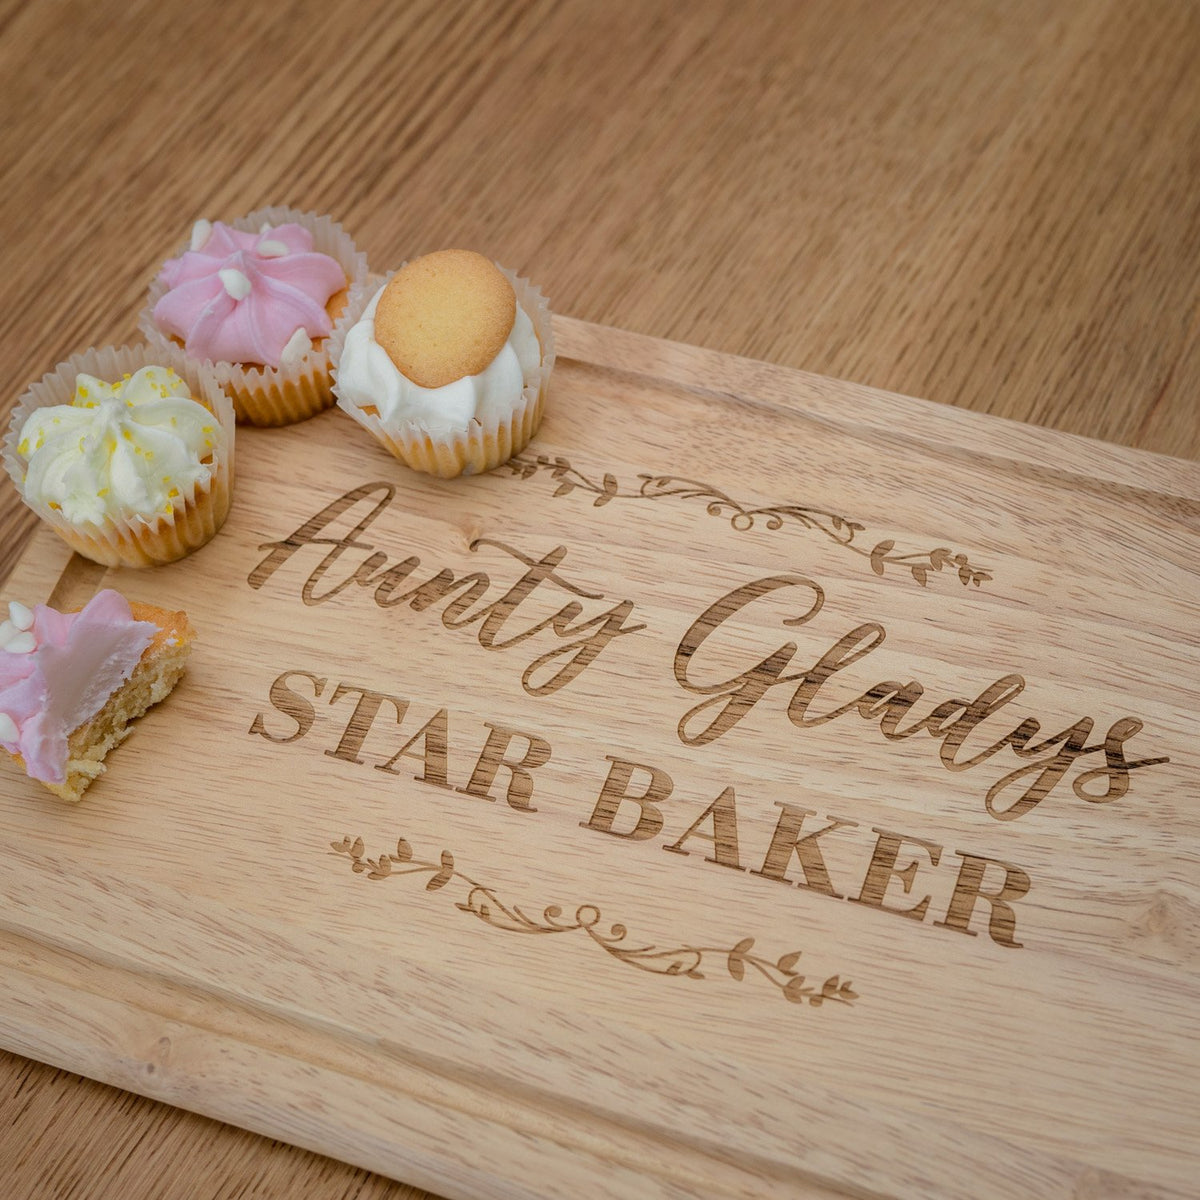 Star Baker / Bake Off Chopping Board